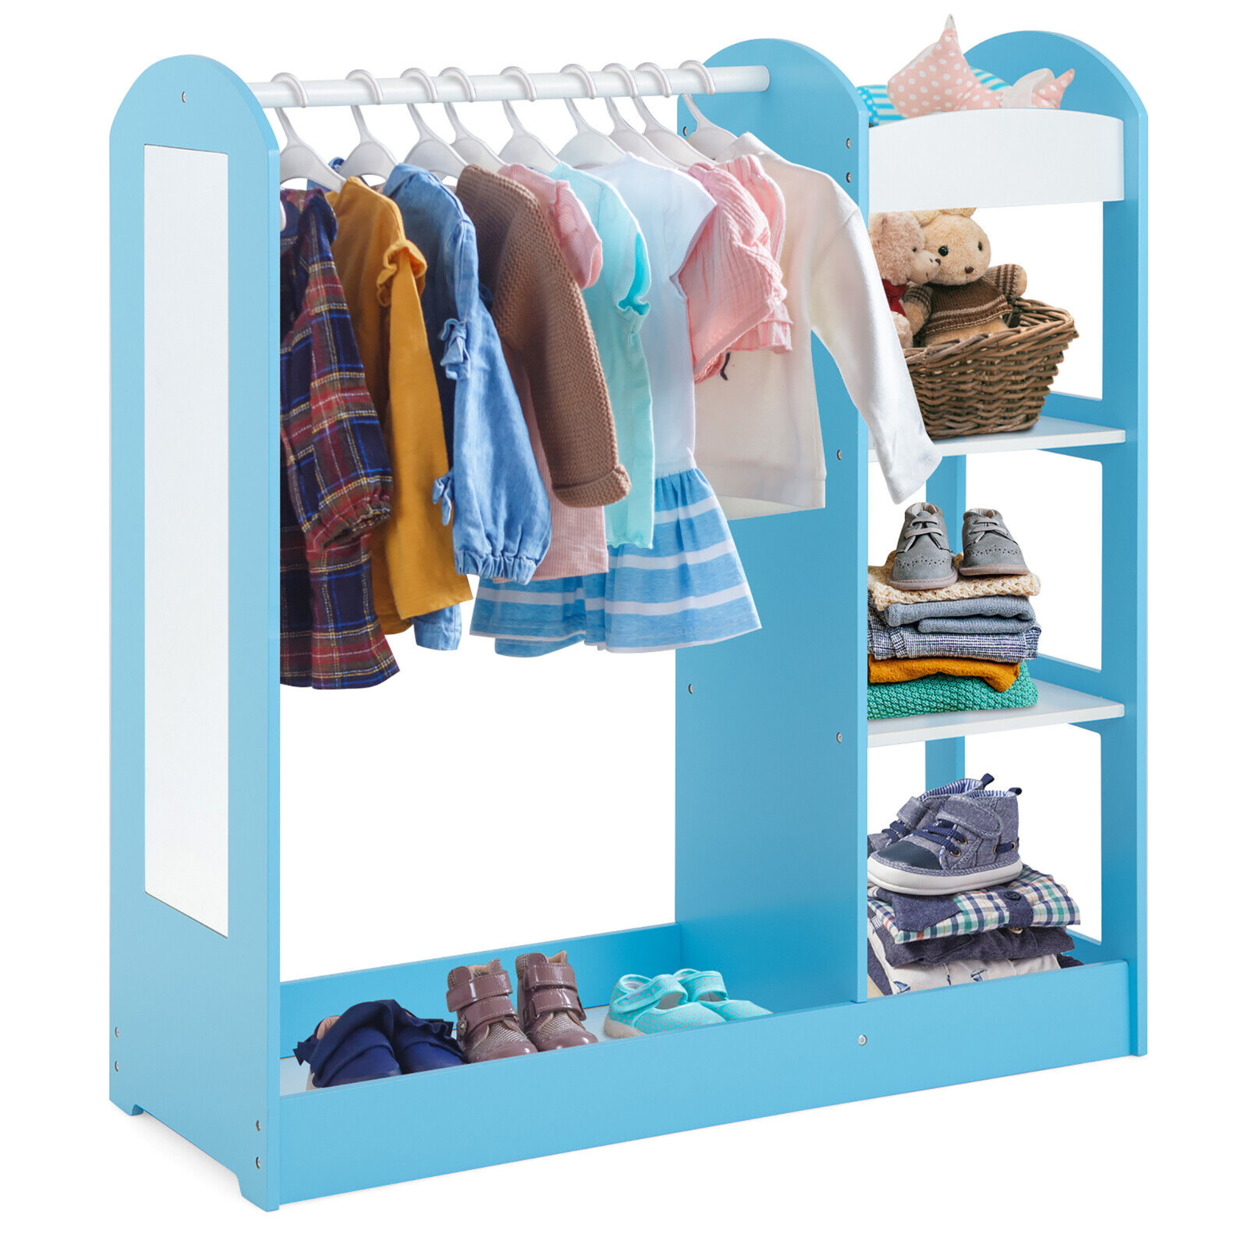 Kids Dress Up Storage Hanging Armoire Dresser Costume Closet W/ Mirror Shelves - Blue